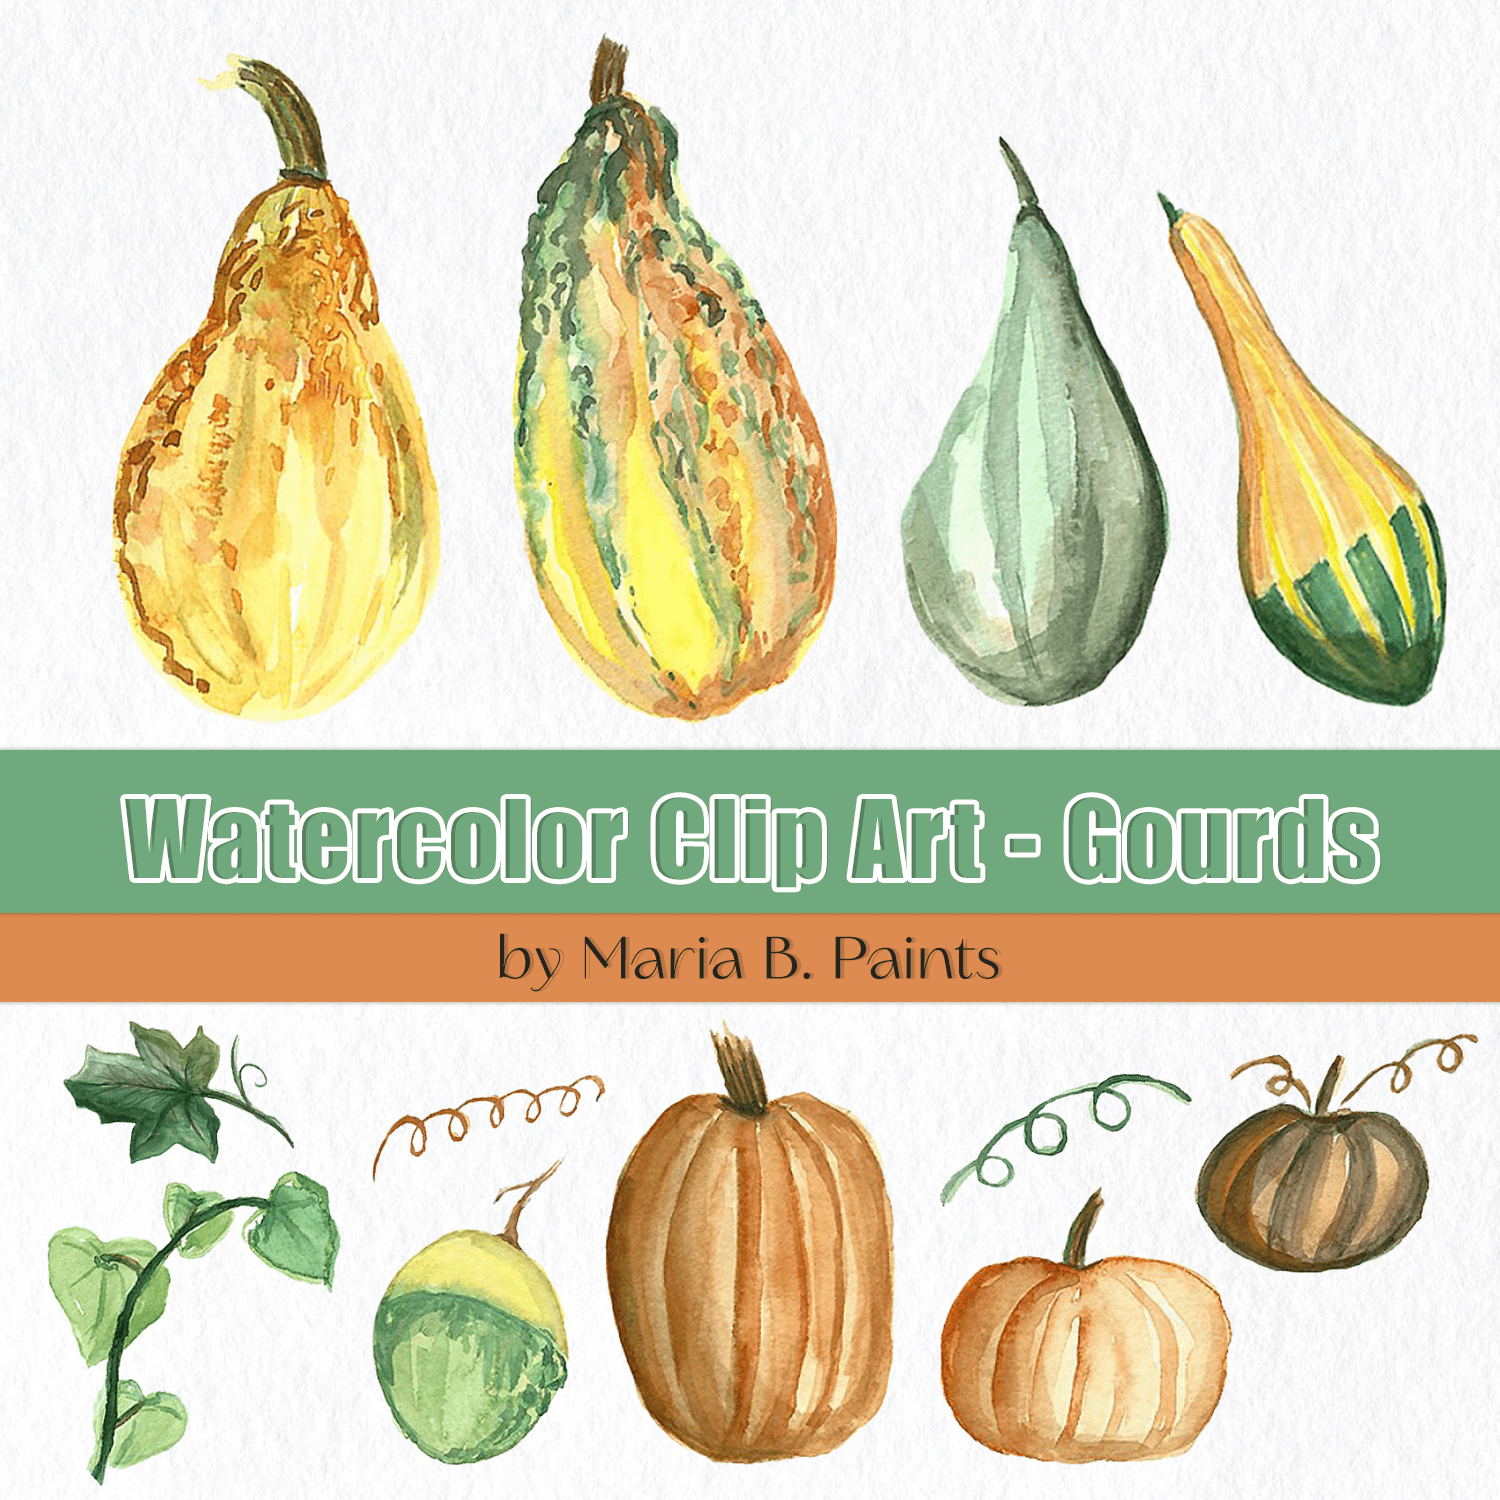 Watercolor Clip Art - Gourds cover.